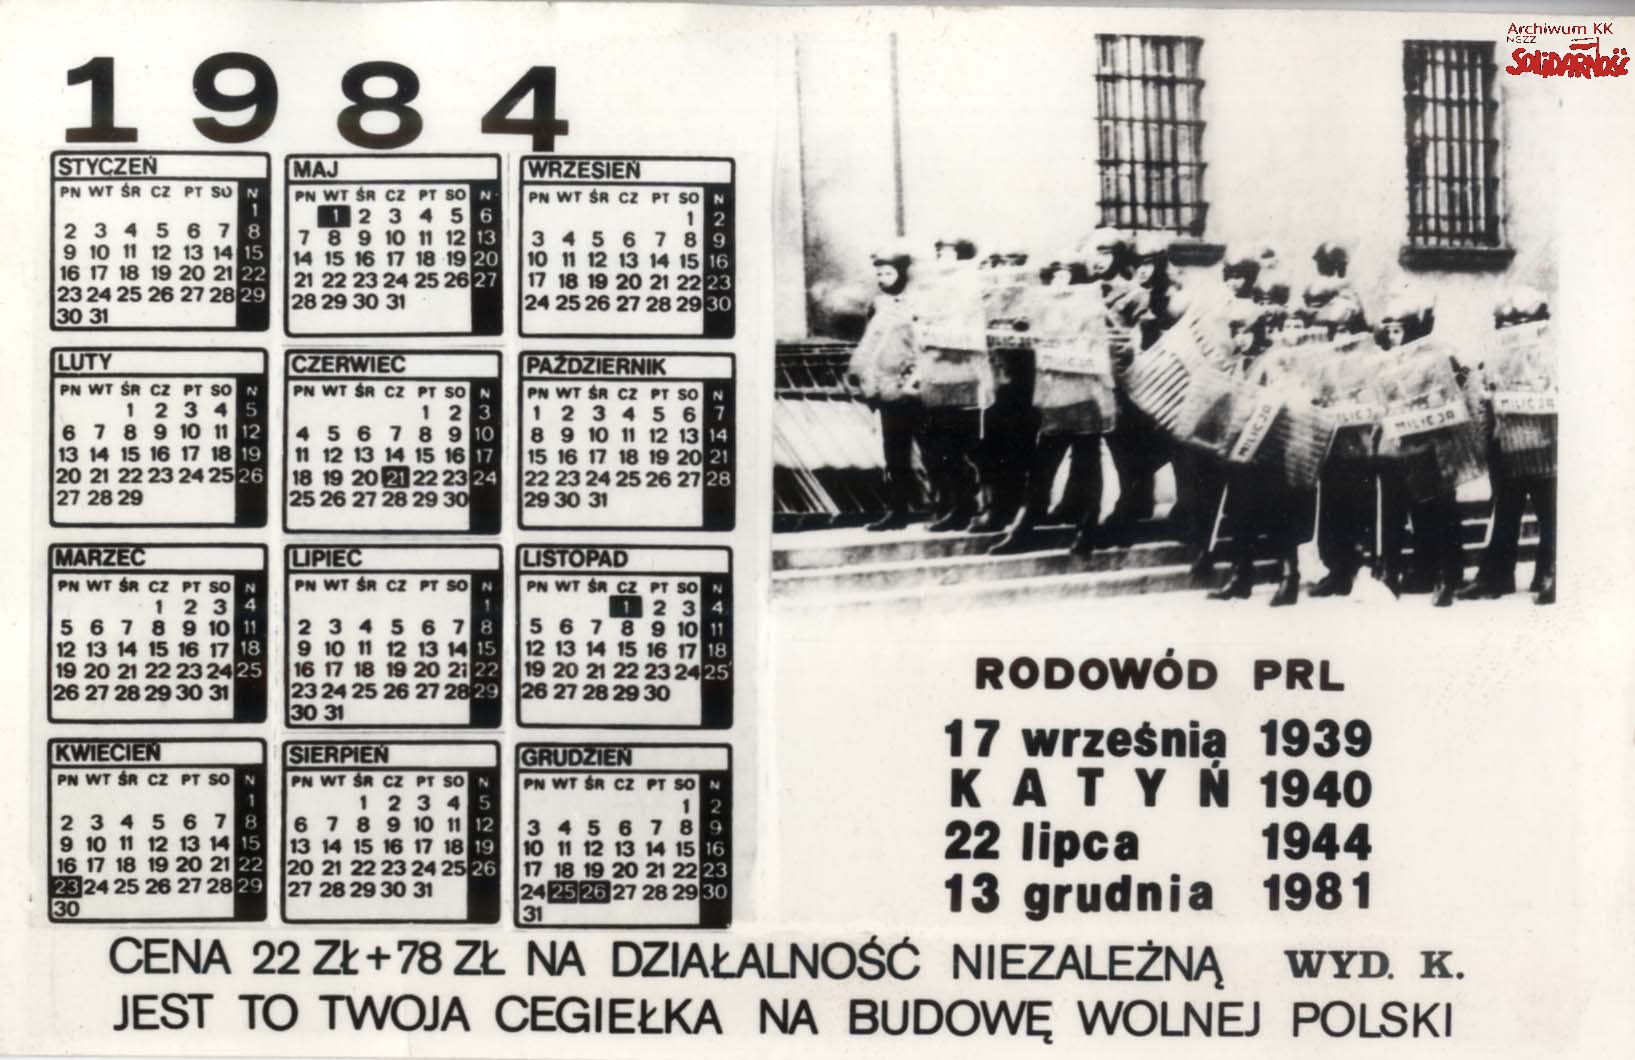 Solidarity calendar from 1984